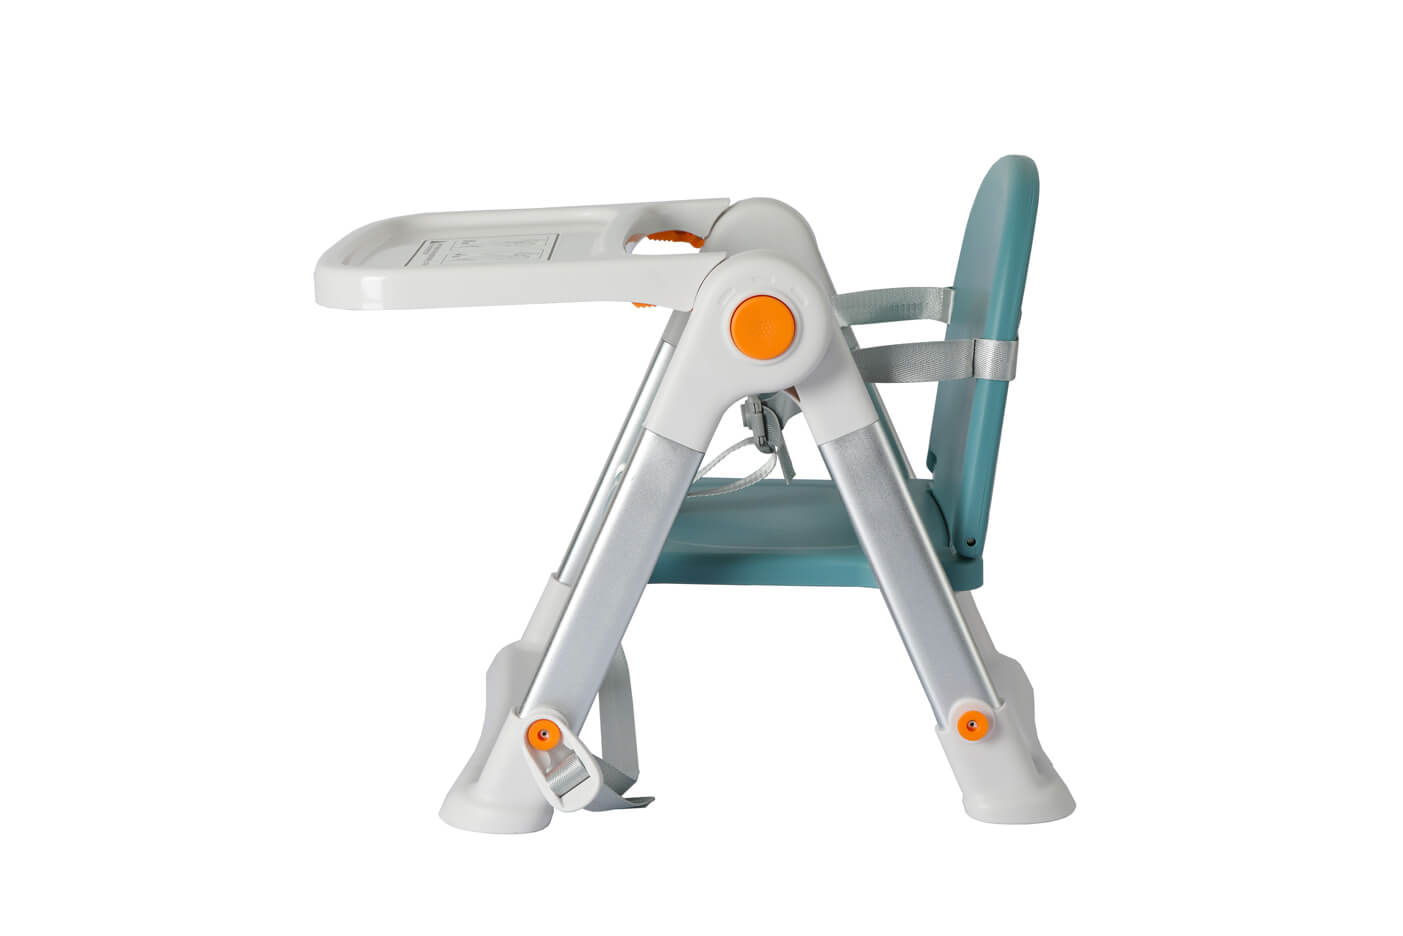 Advantages of Babyhood's Folding High Chair